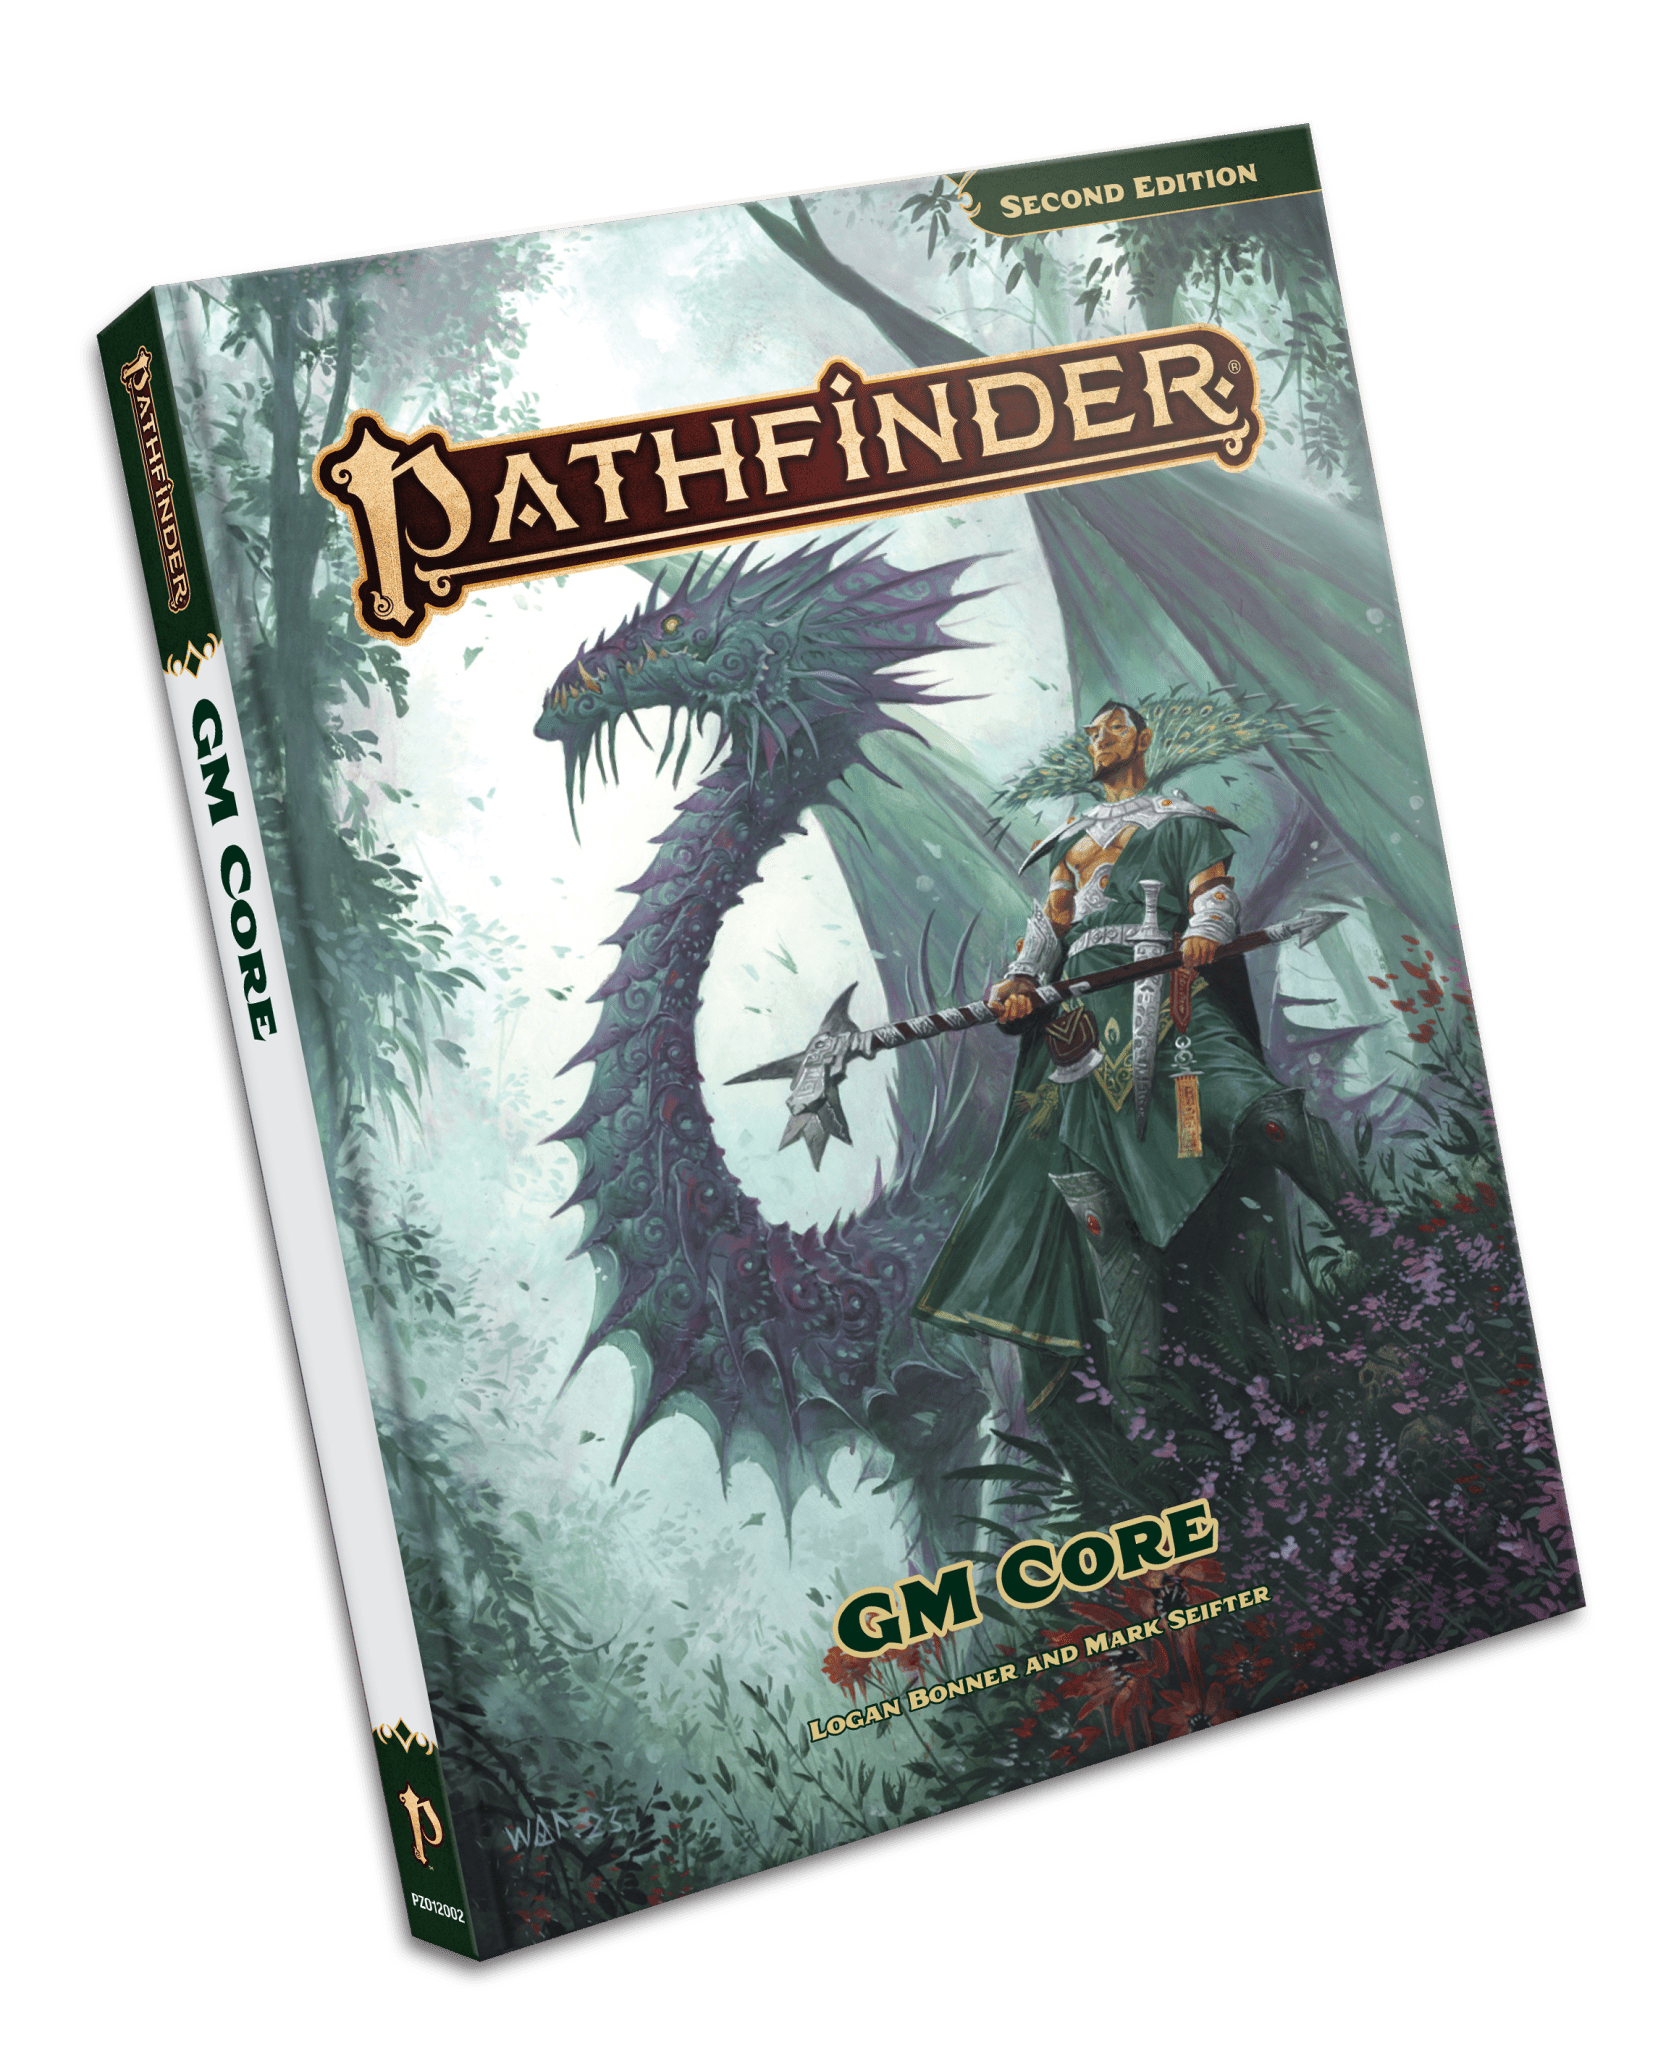 Pathfinder: GM Core (Second Edition) - Gamescape